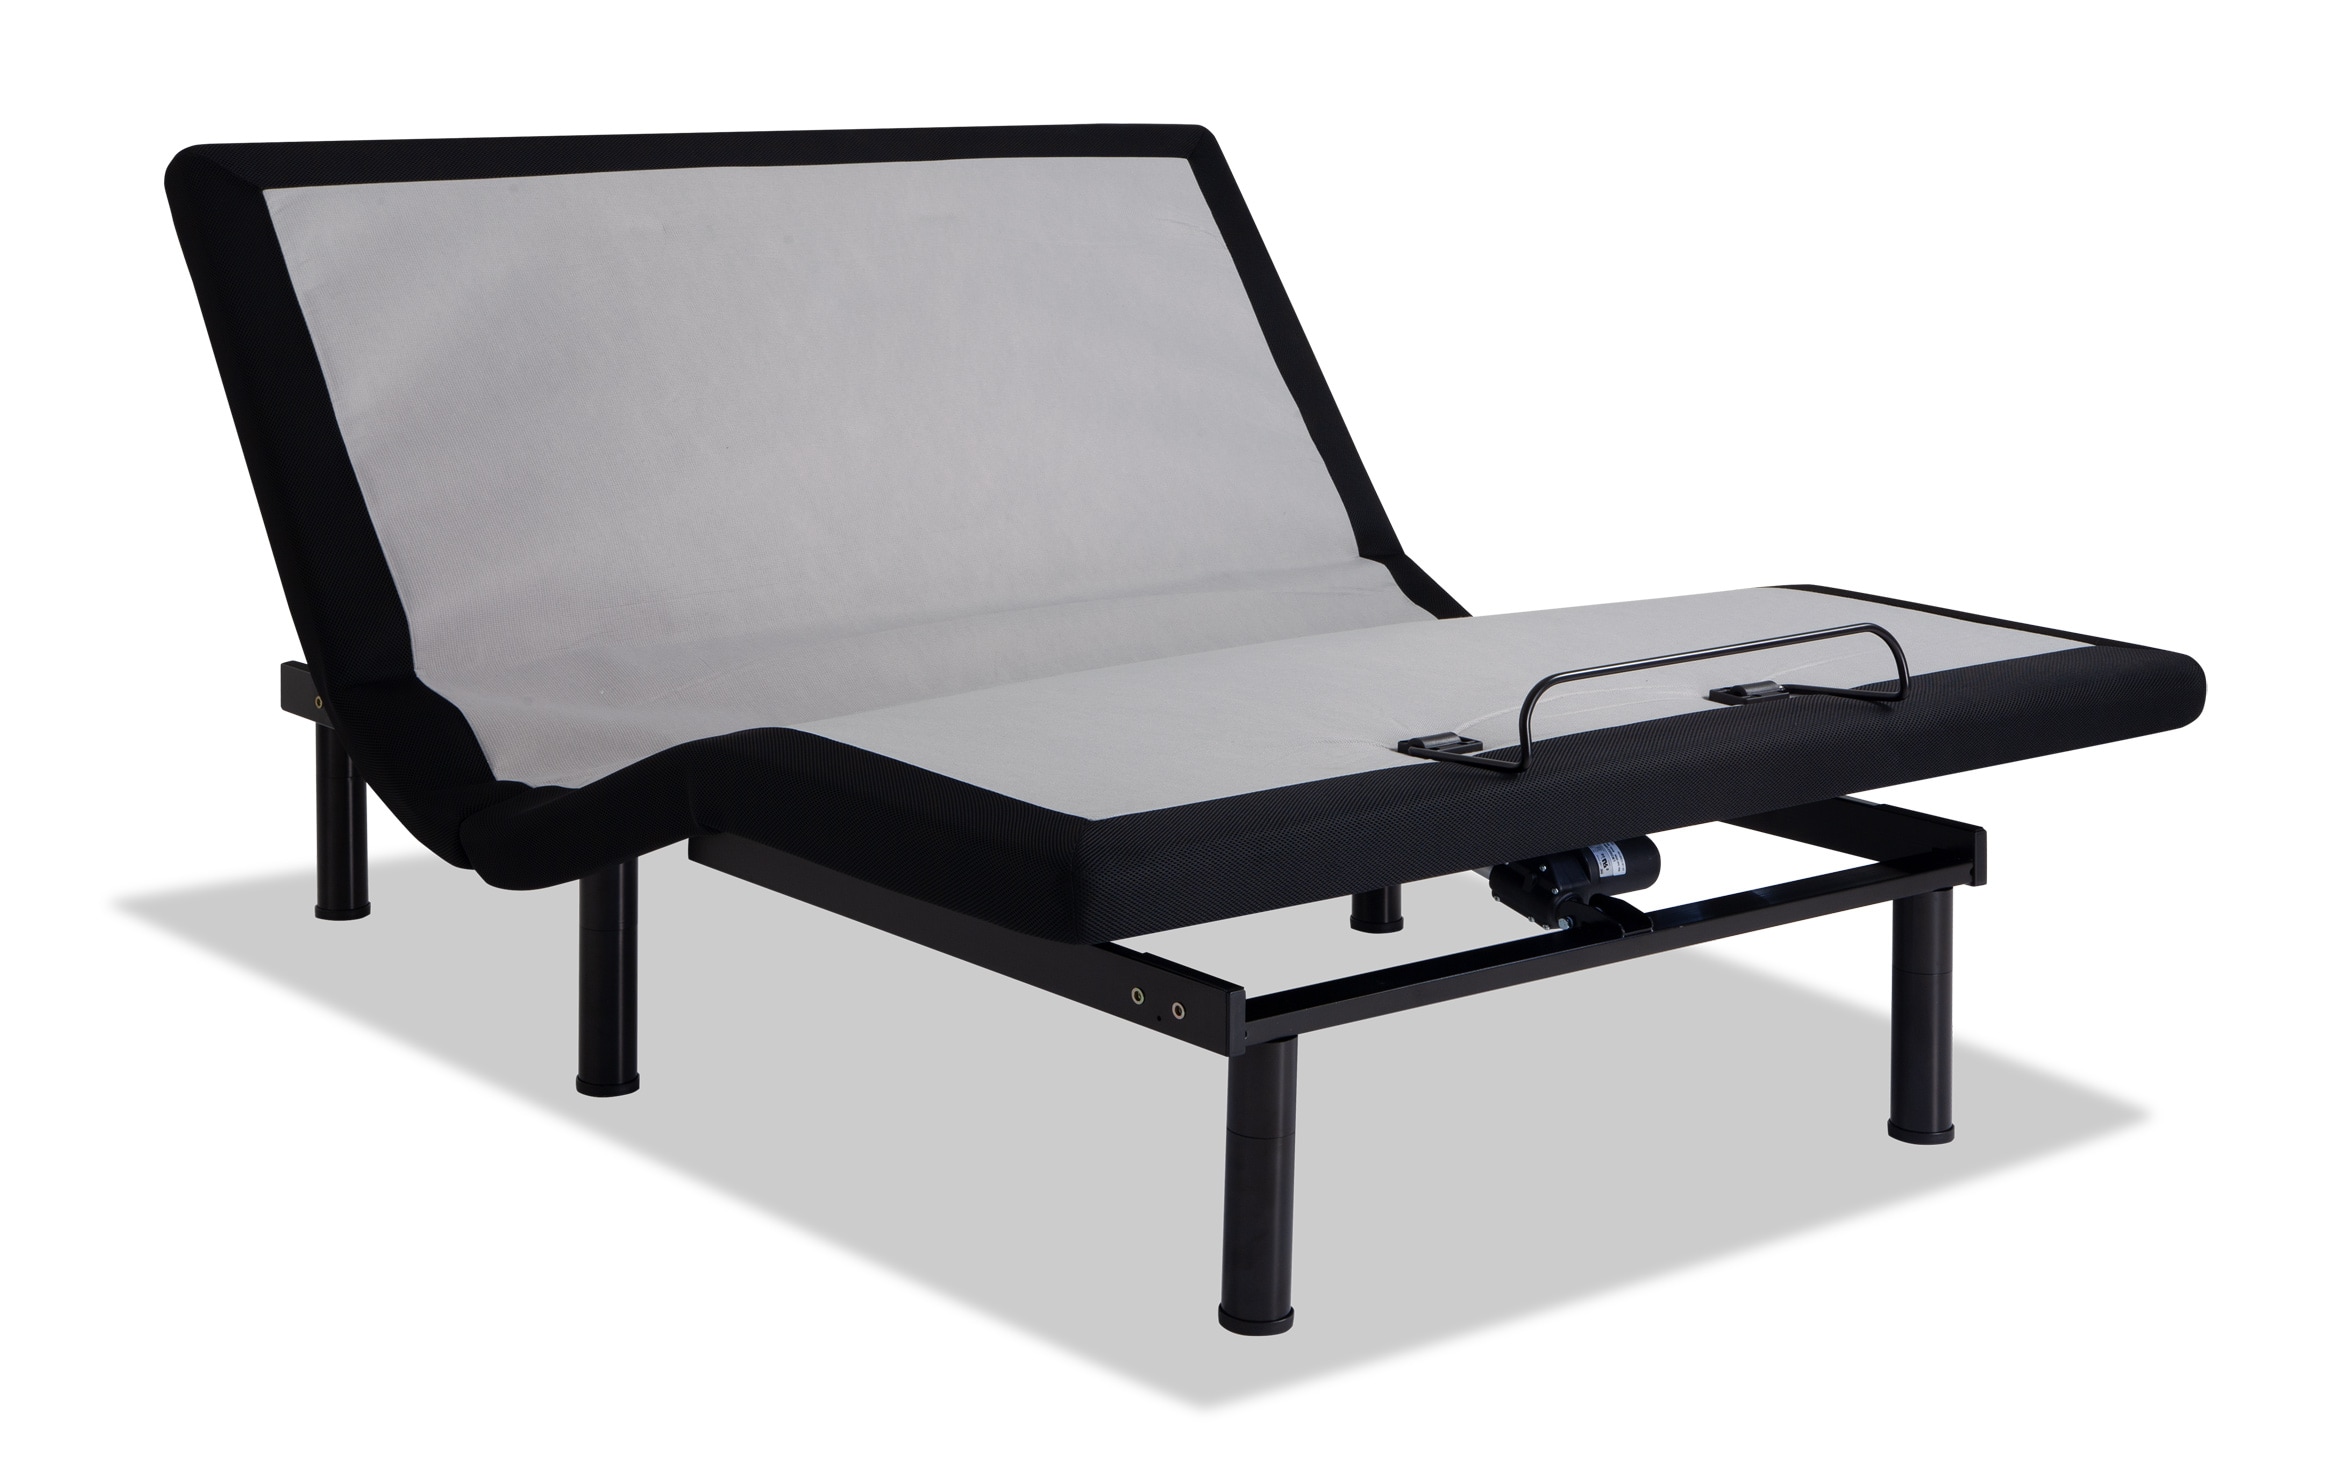 Power Bob Elite Queen Adjustable Base, Bed Frames That Work With Adjustable Beds